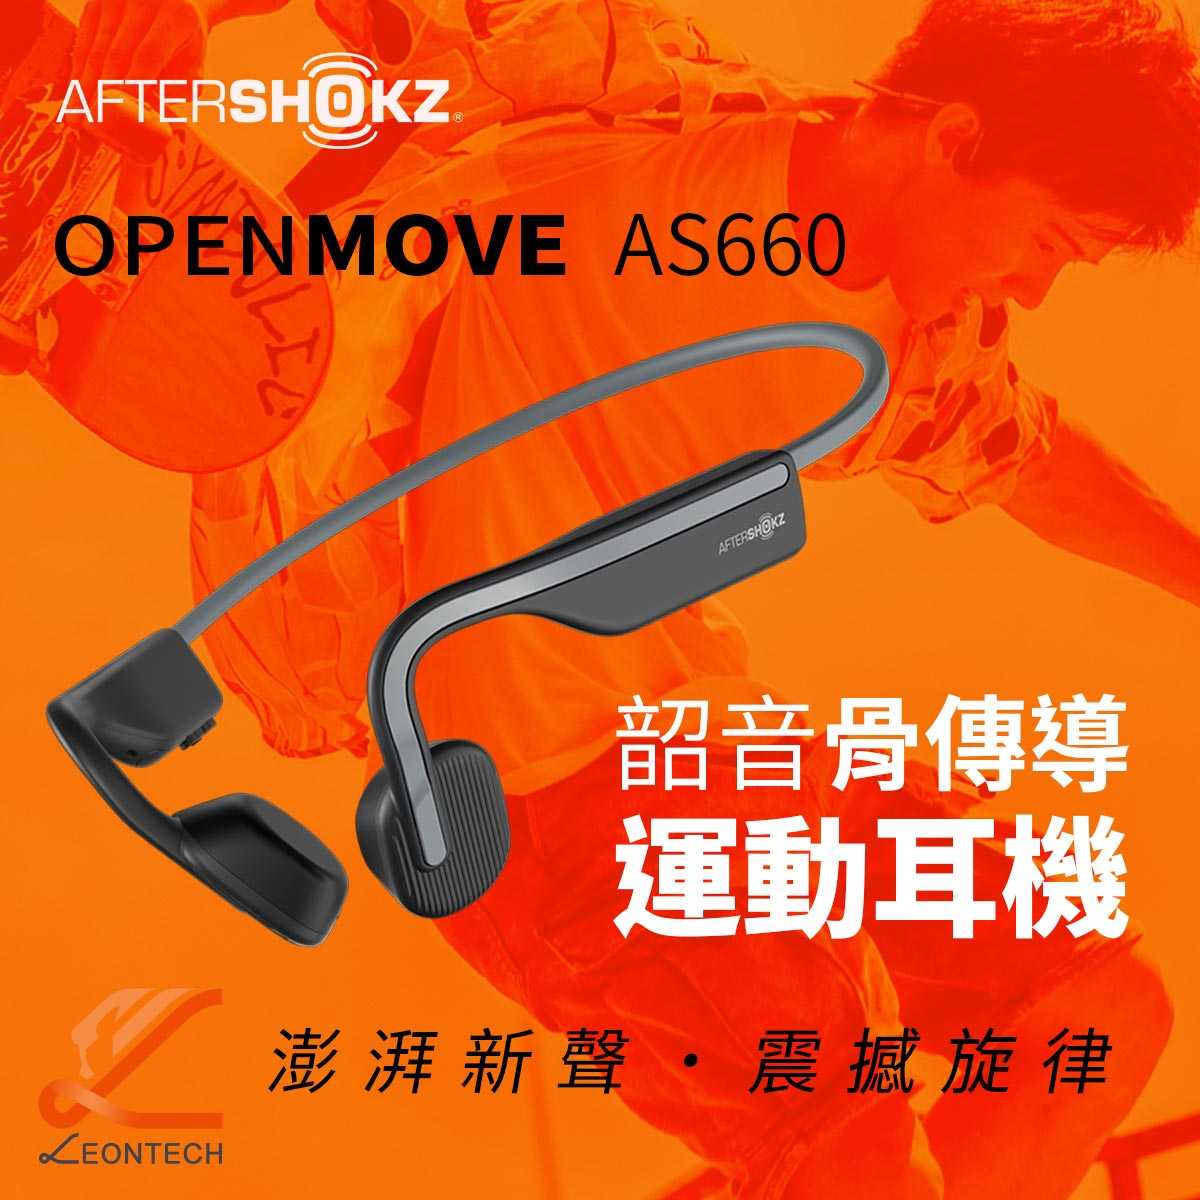 AfterShokz韶音 OpenMove AS660骨傳導鈦合金耳機 IP67級防水